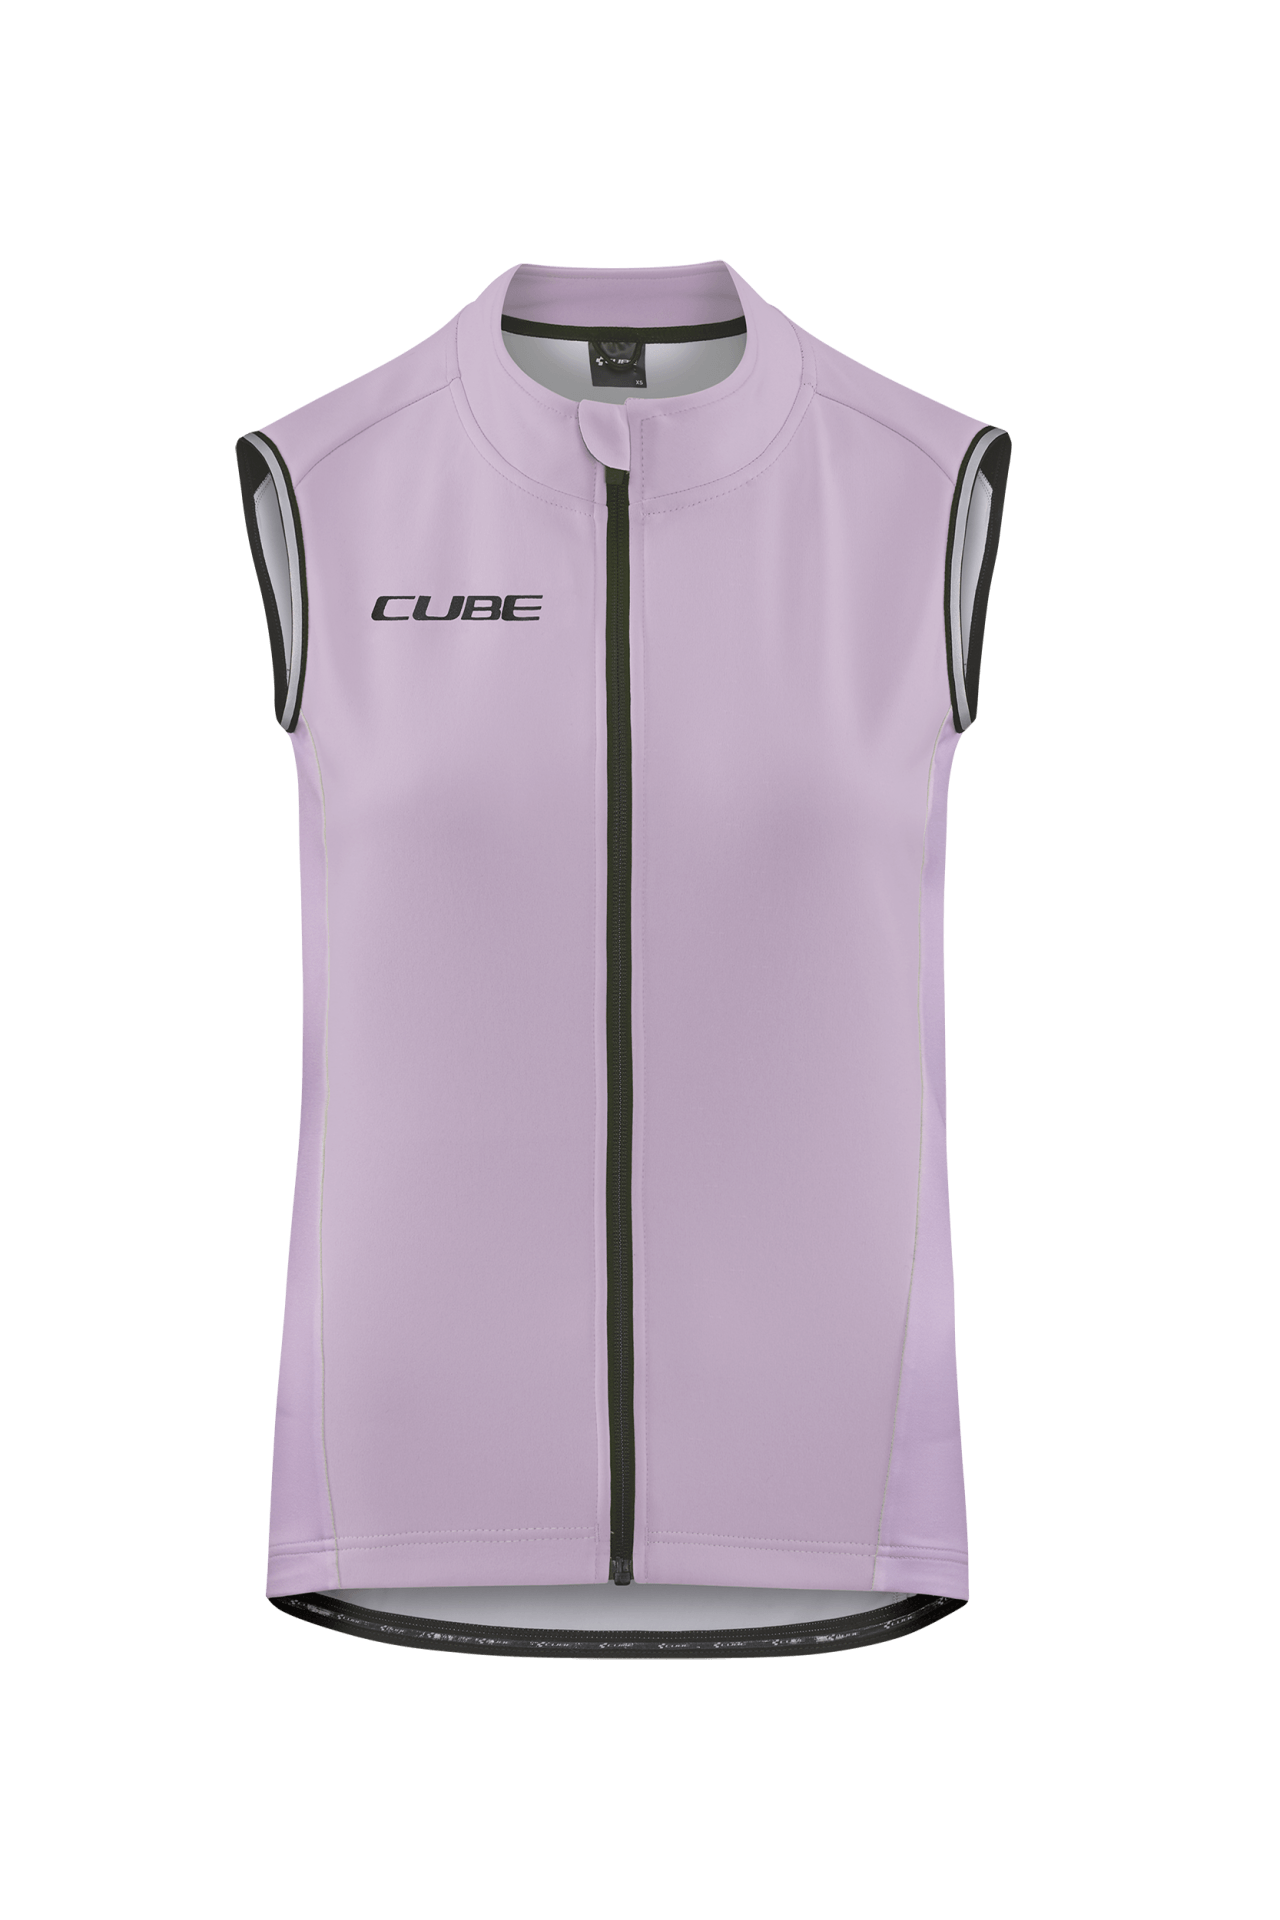 CUBE BLACKLINE WS Softshellweste violet S (36)